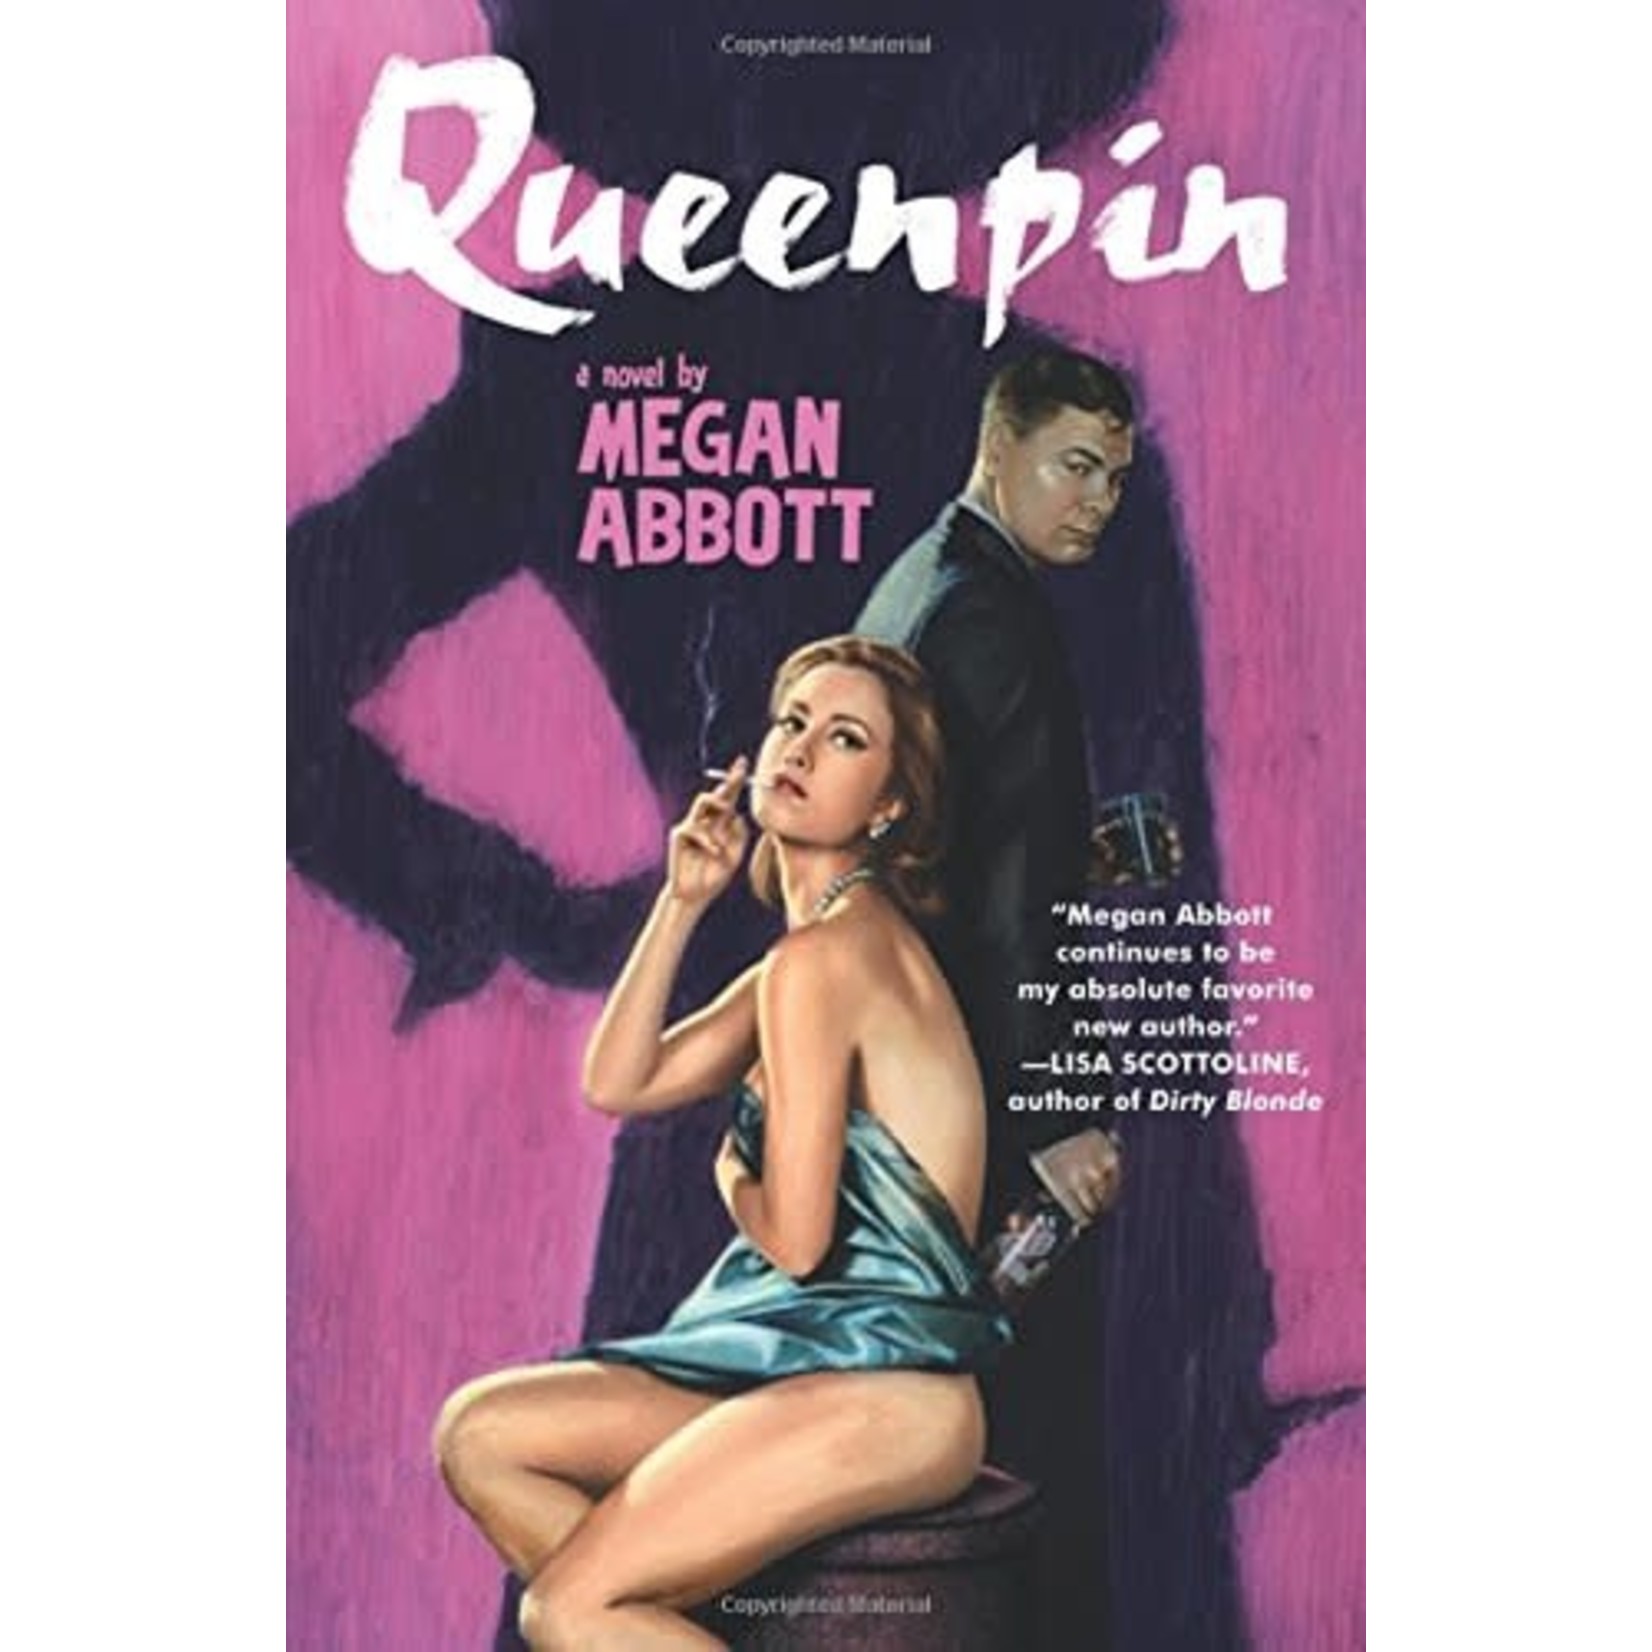 Abbott, Megan Abbott, Megan - Queenpin